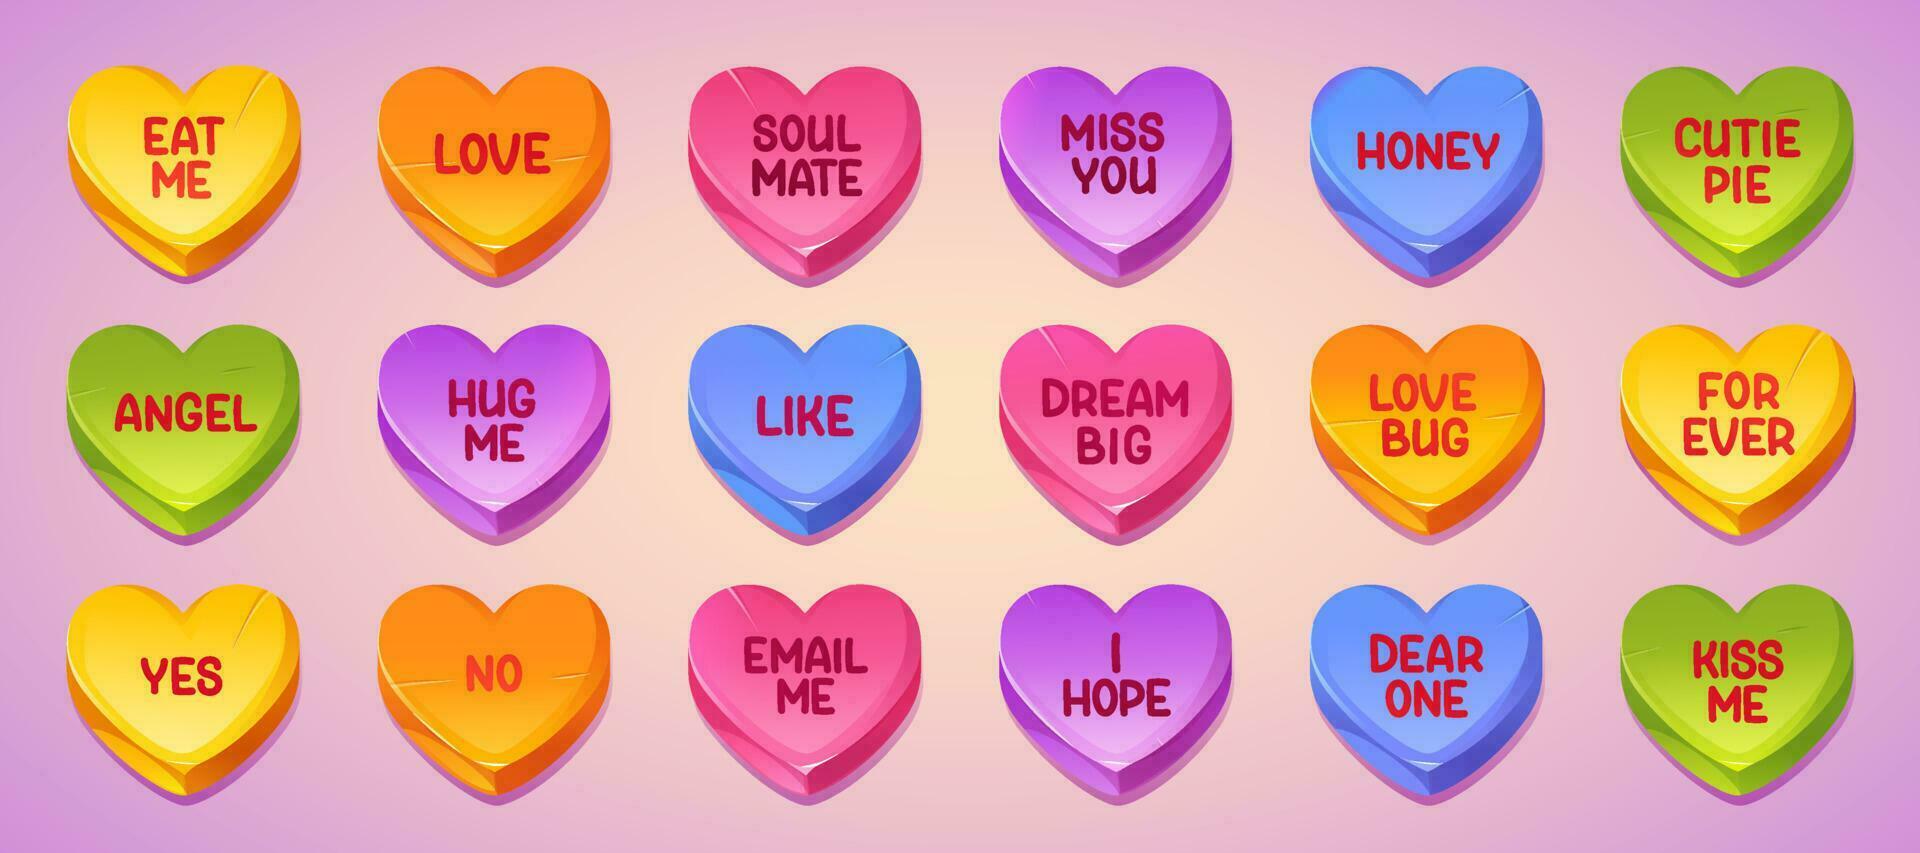 Love conversation sweets, heart shape candies vector